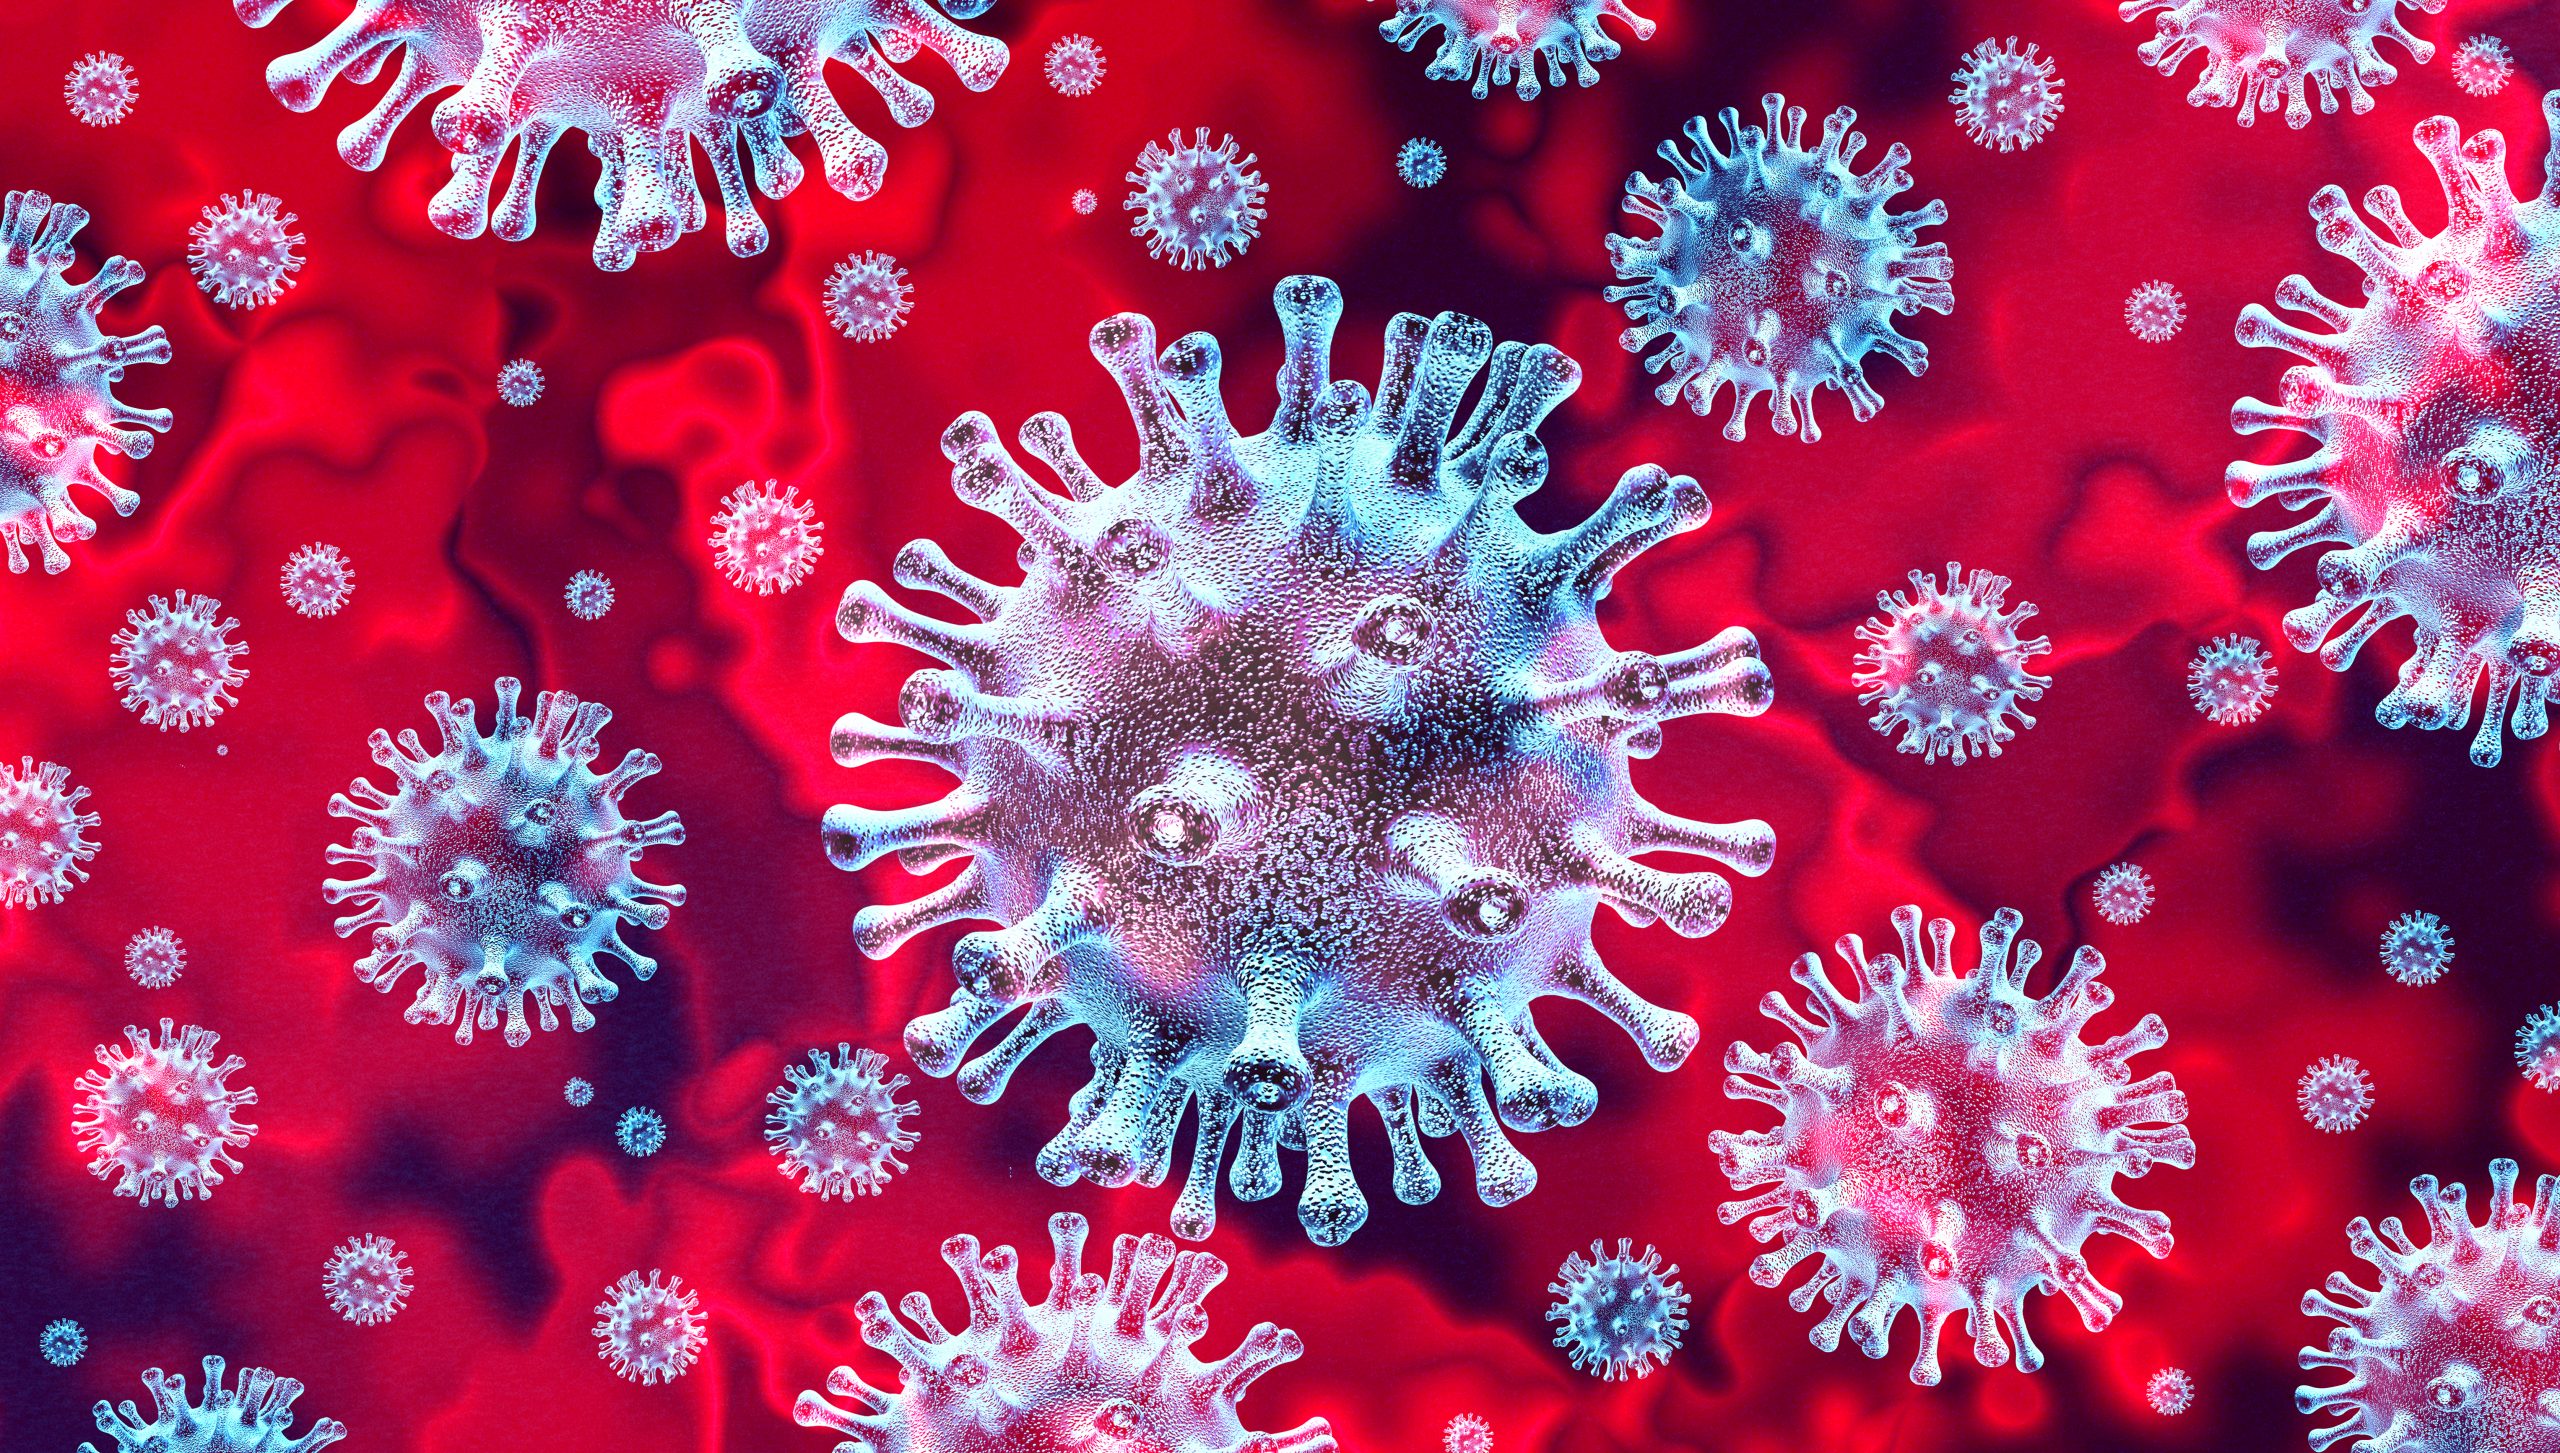 Coronavirus cells close up